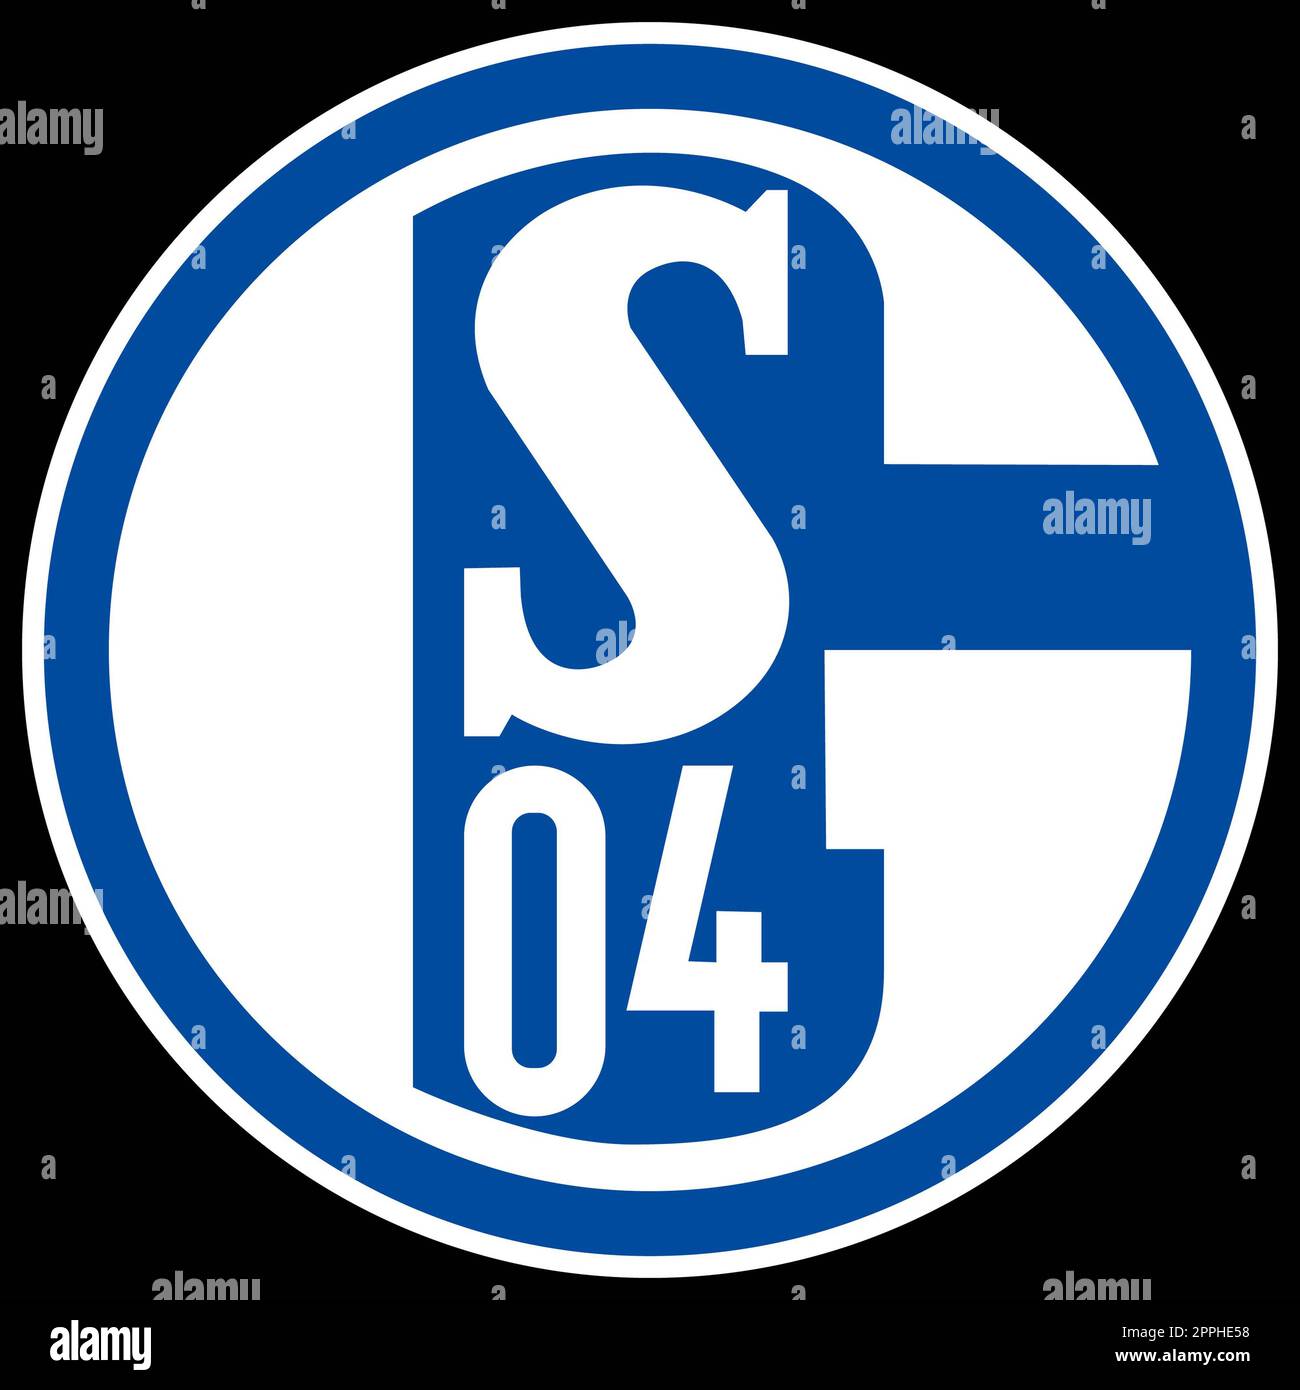 Frankfurt am Main, Germany - 10.23.2022 Logo of the German football club Schalke 04. Vector image. Stock Photo